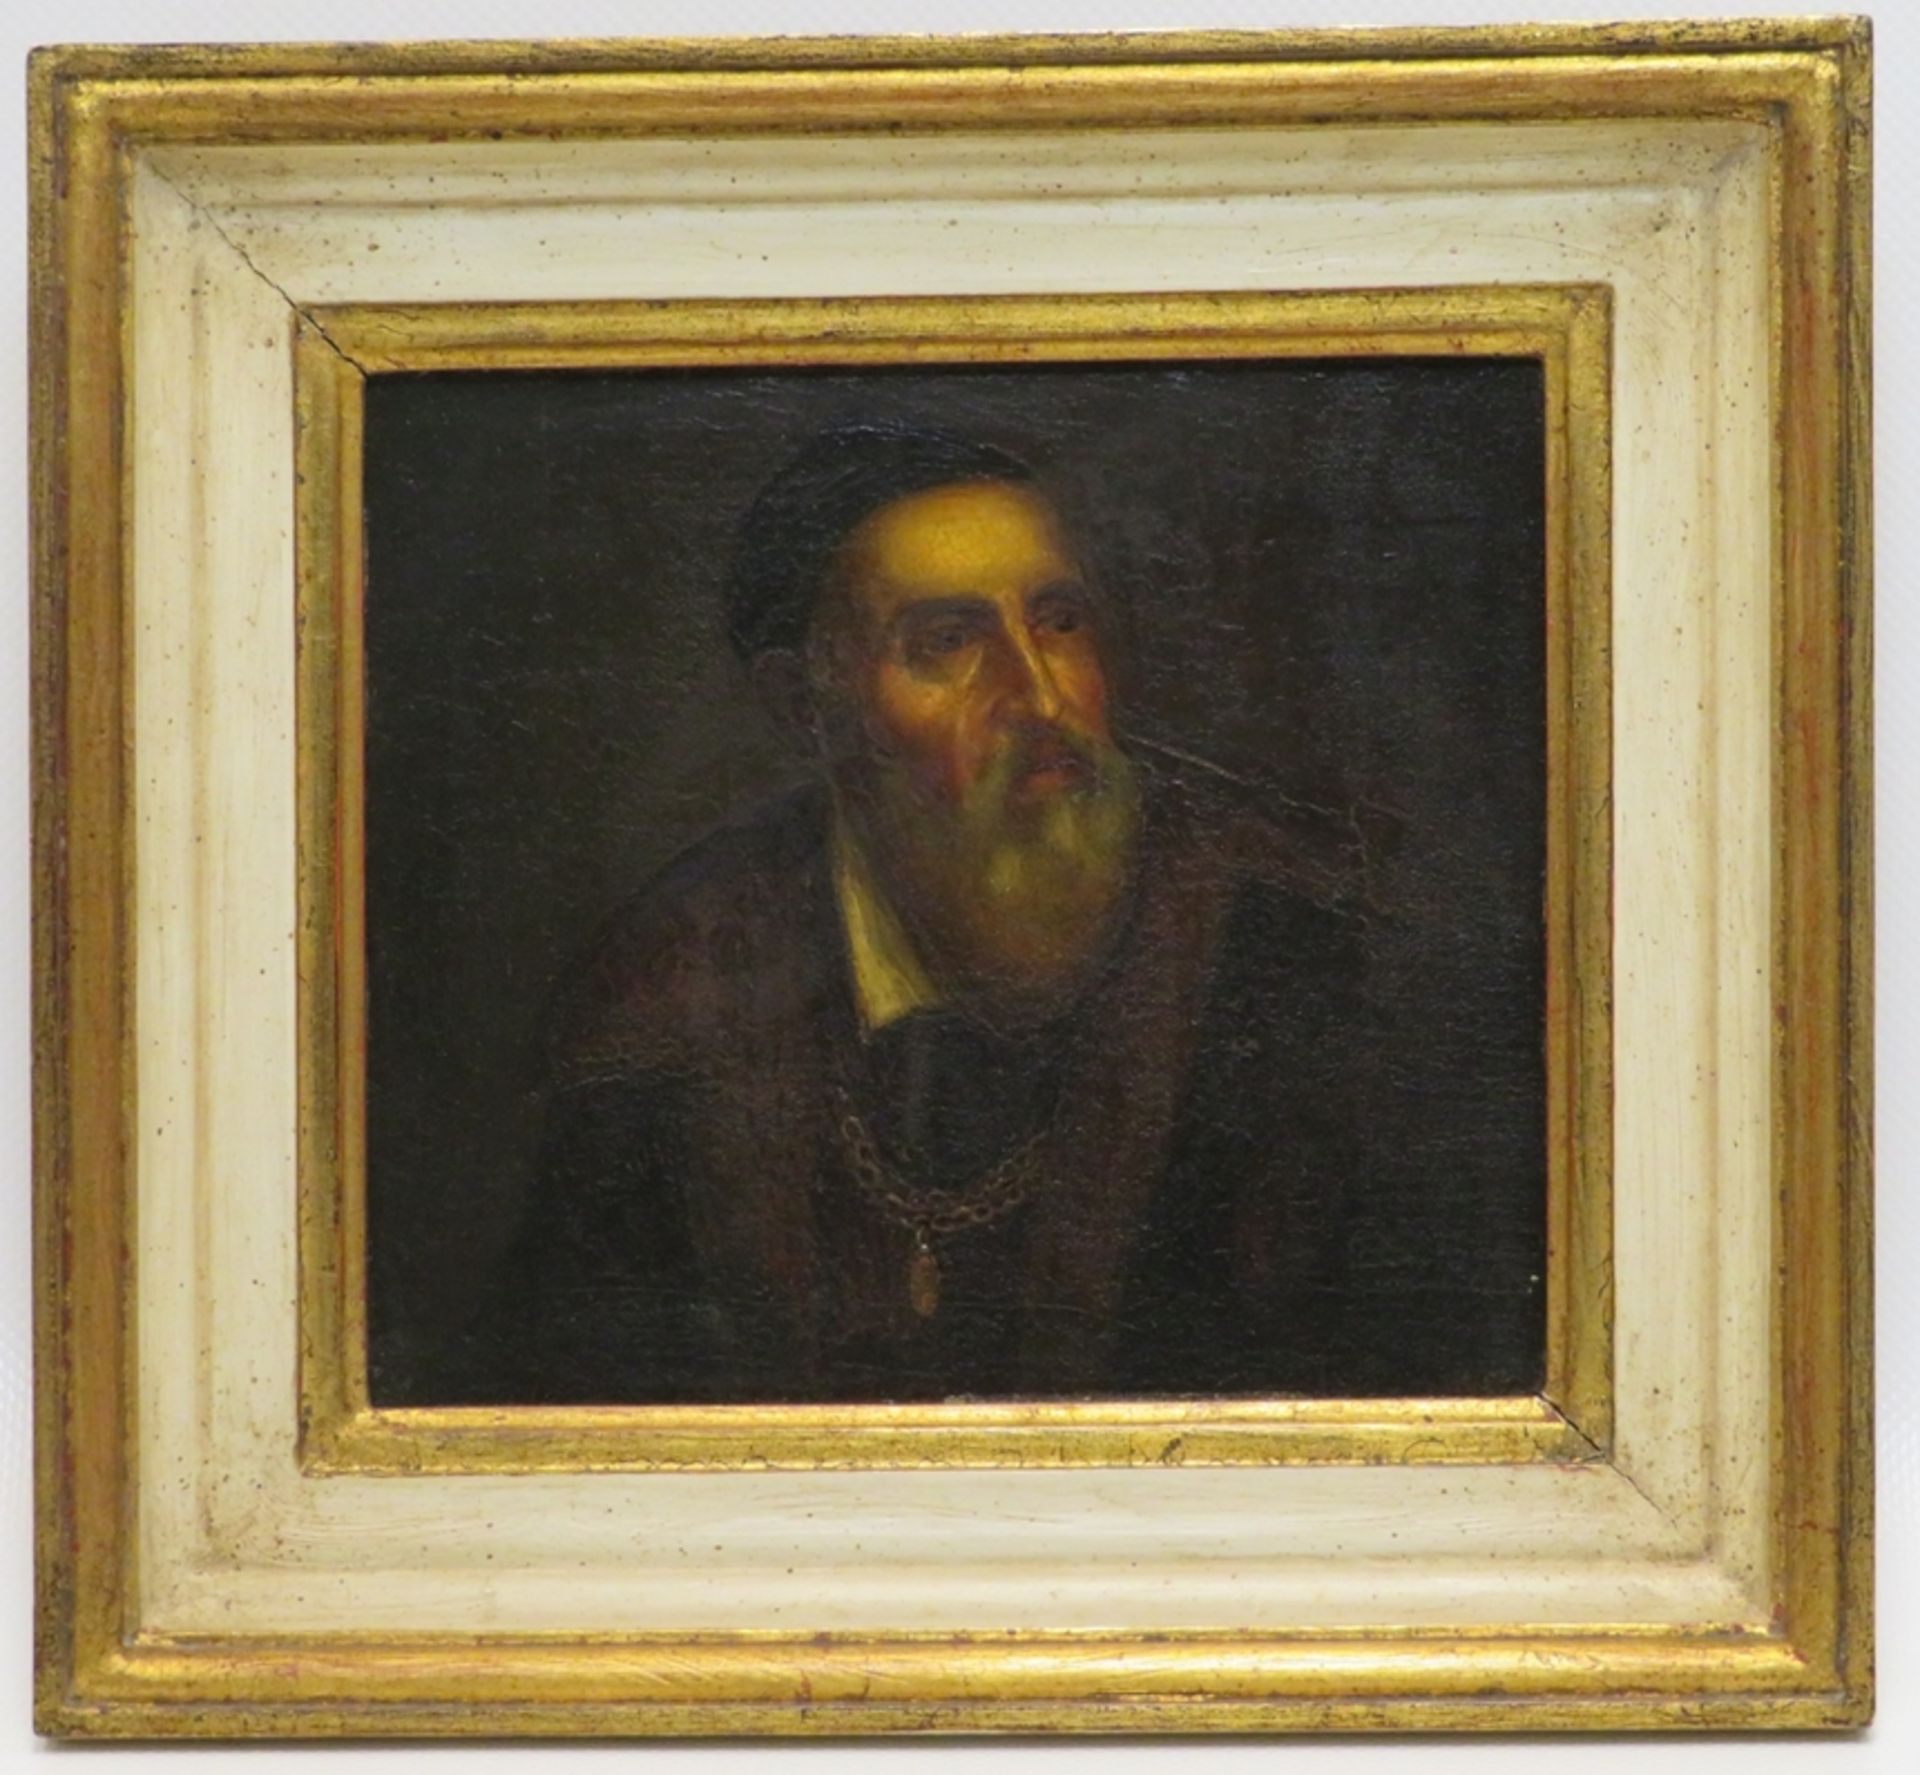 Nach Tizian (1490 - 1576), "Selbstbildnis" (ca. 1546/47), 19. Jahrhundert,